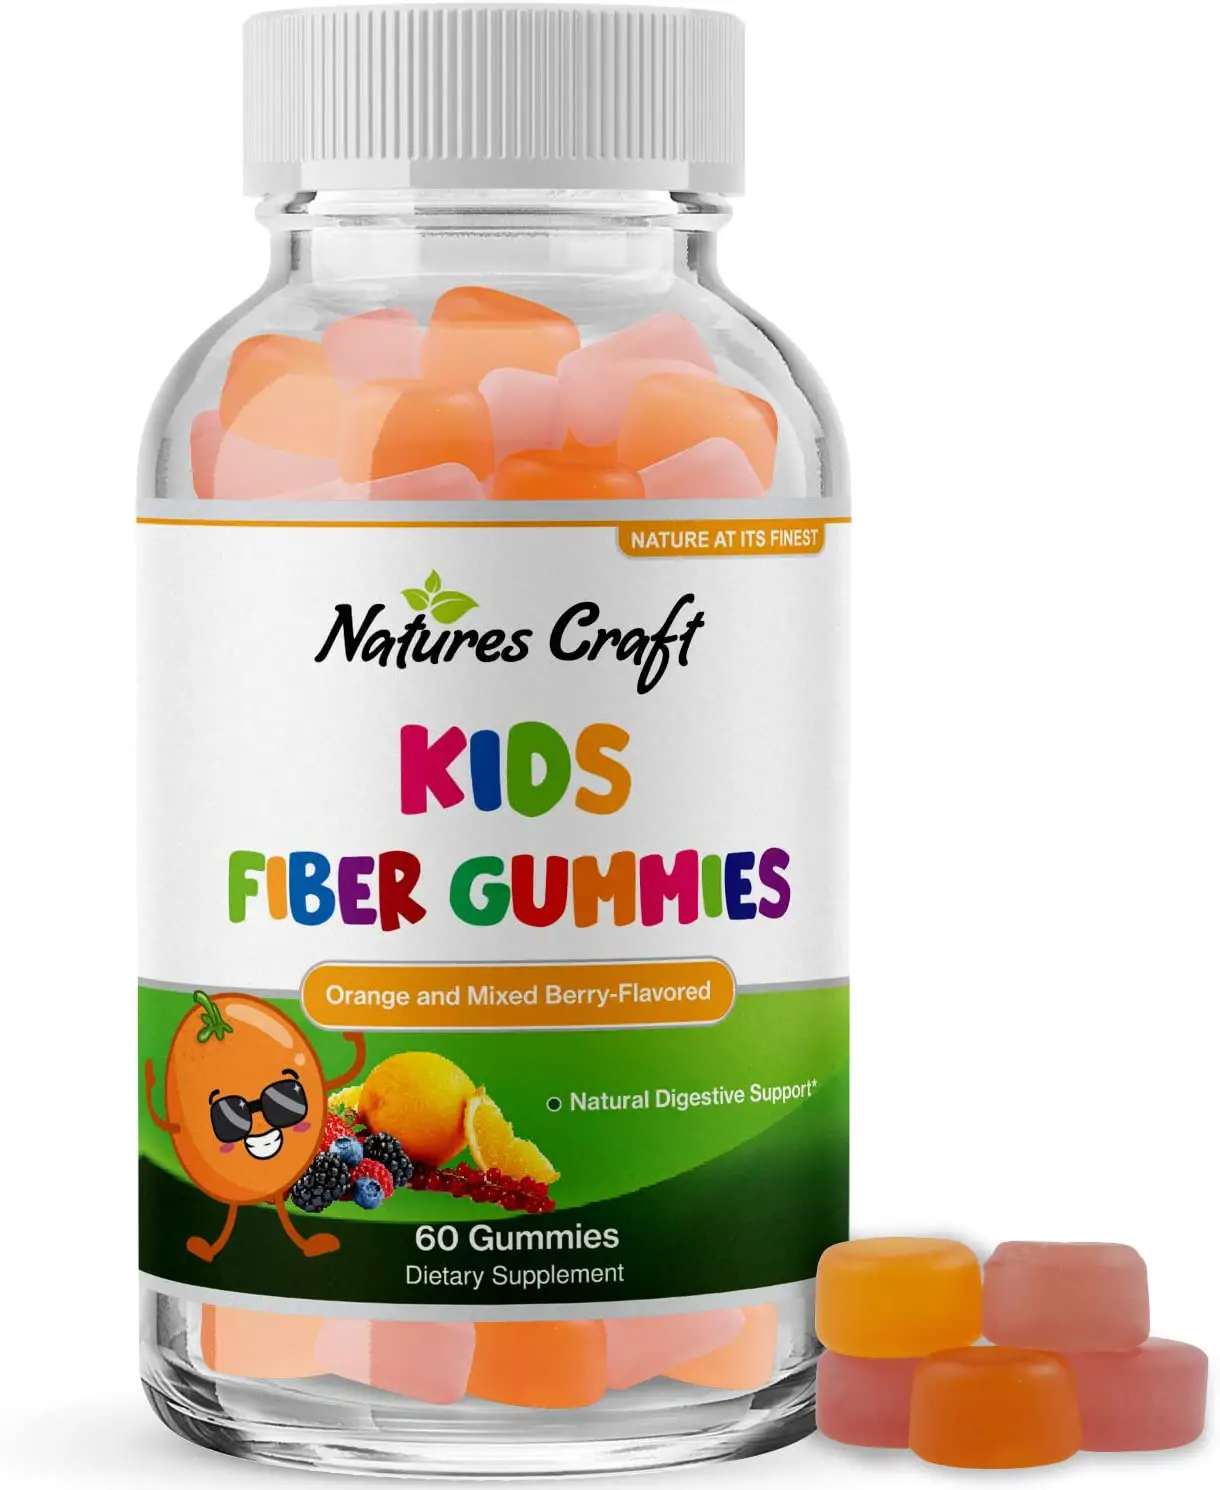 Kids Fiber Gummy Prebiotics Supplement